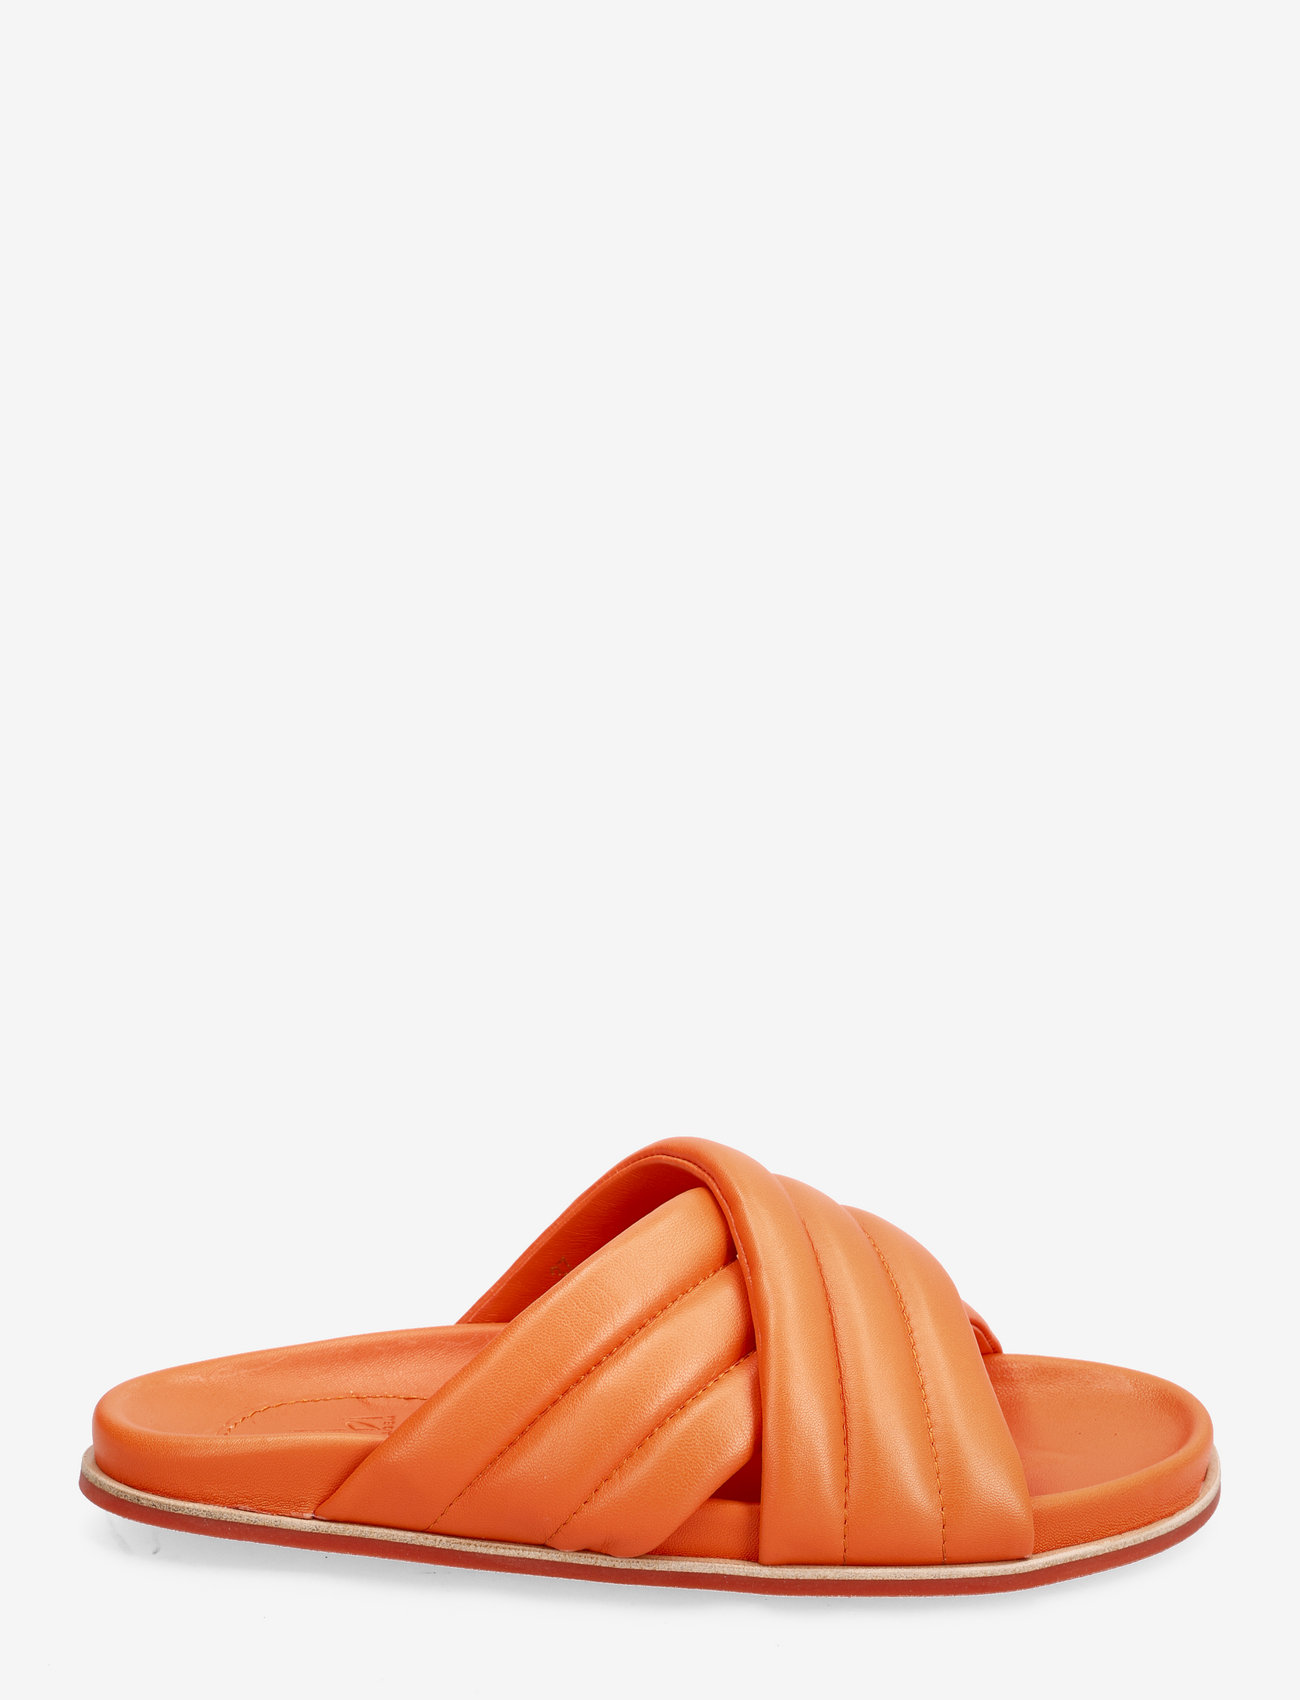 Billi Bi - C5573 - flache sandalen - orange nappa - 1